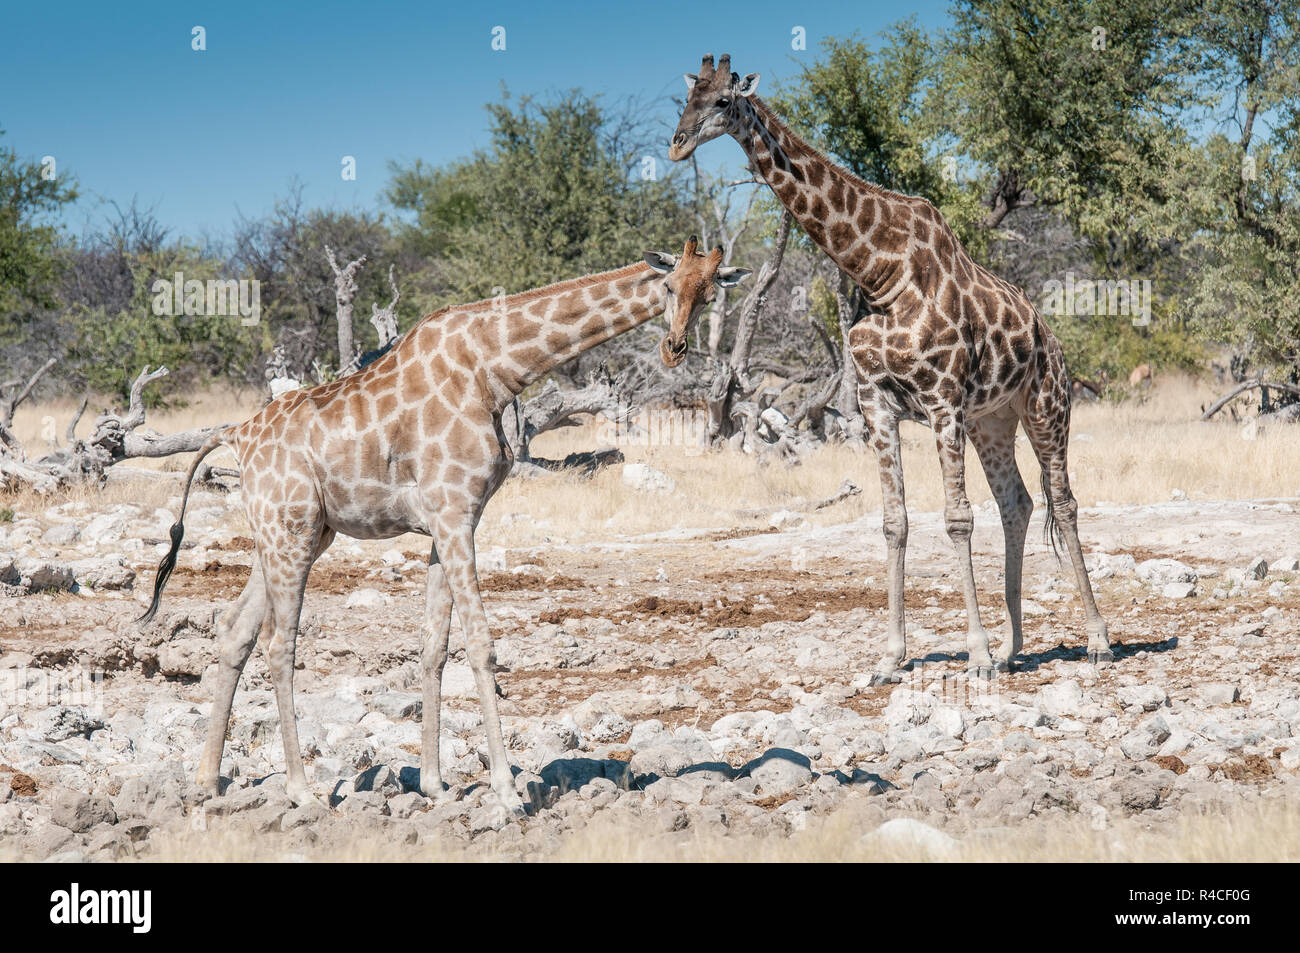 Giraffe herd at a waterhole Stock Photo